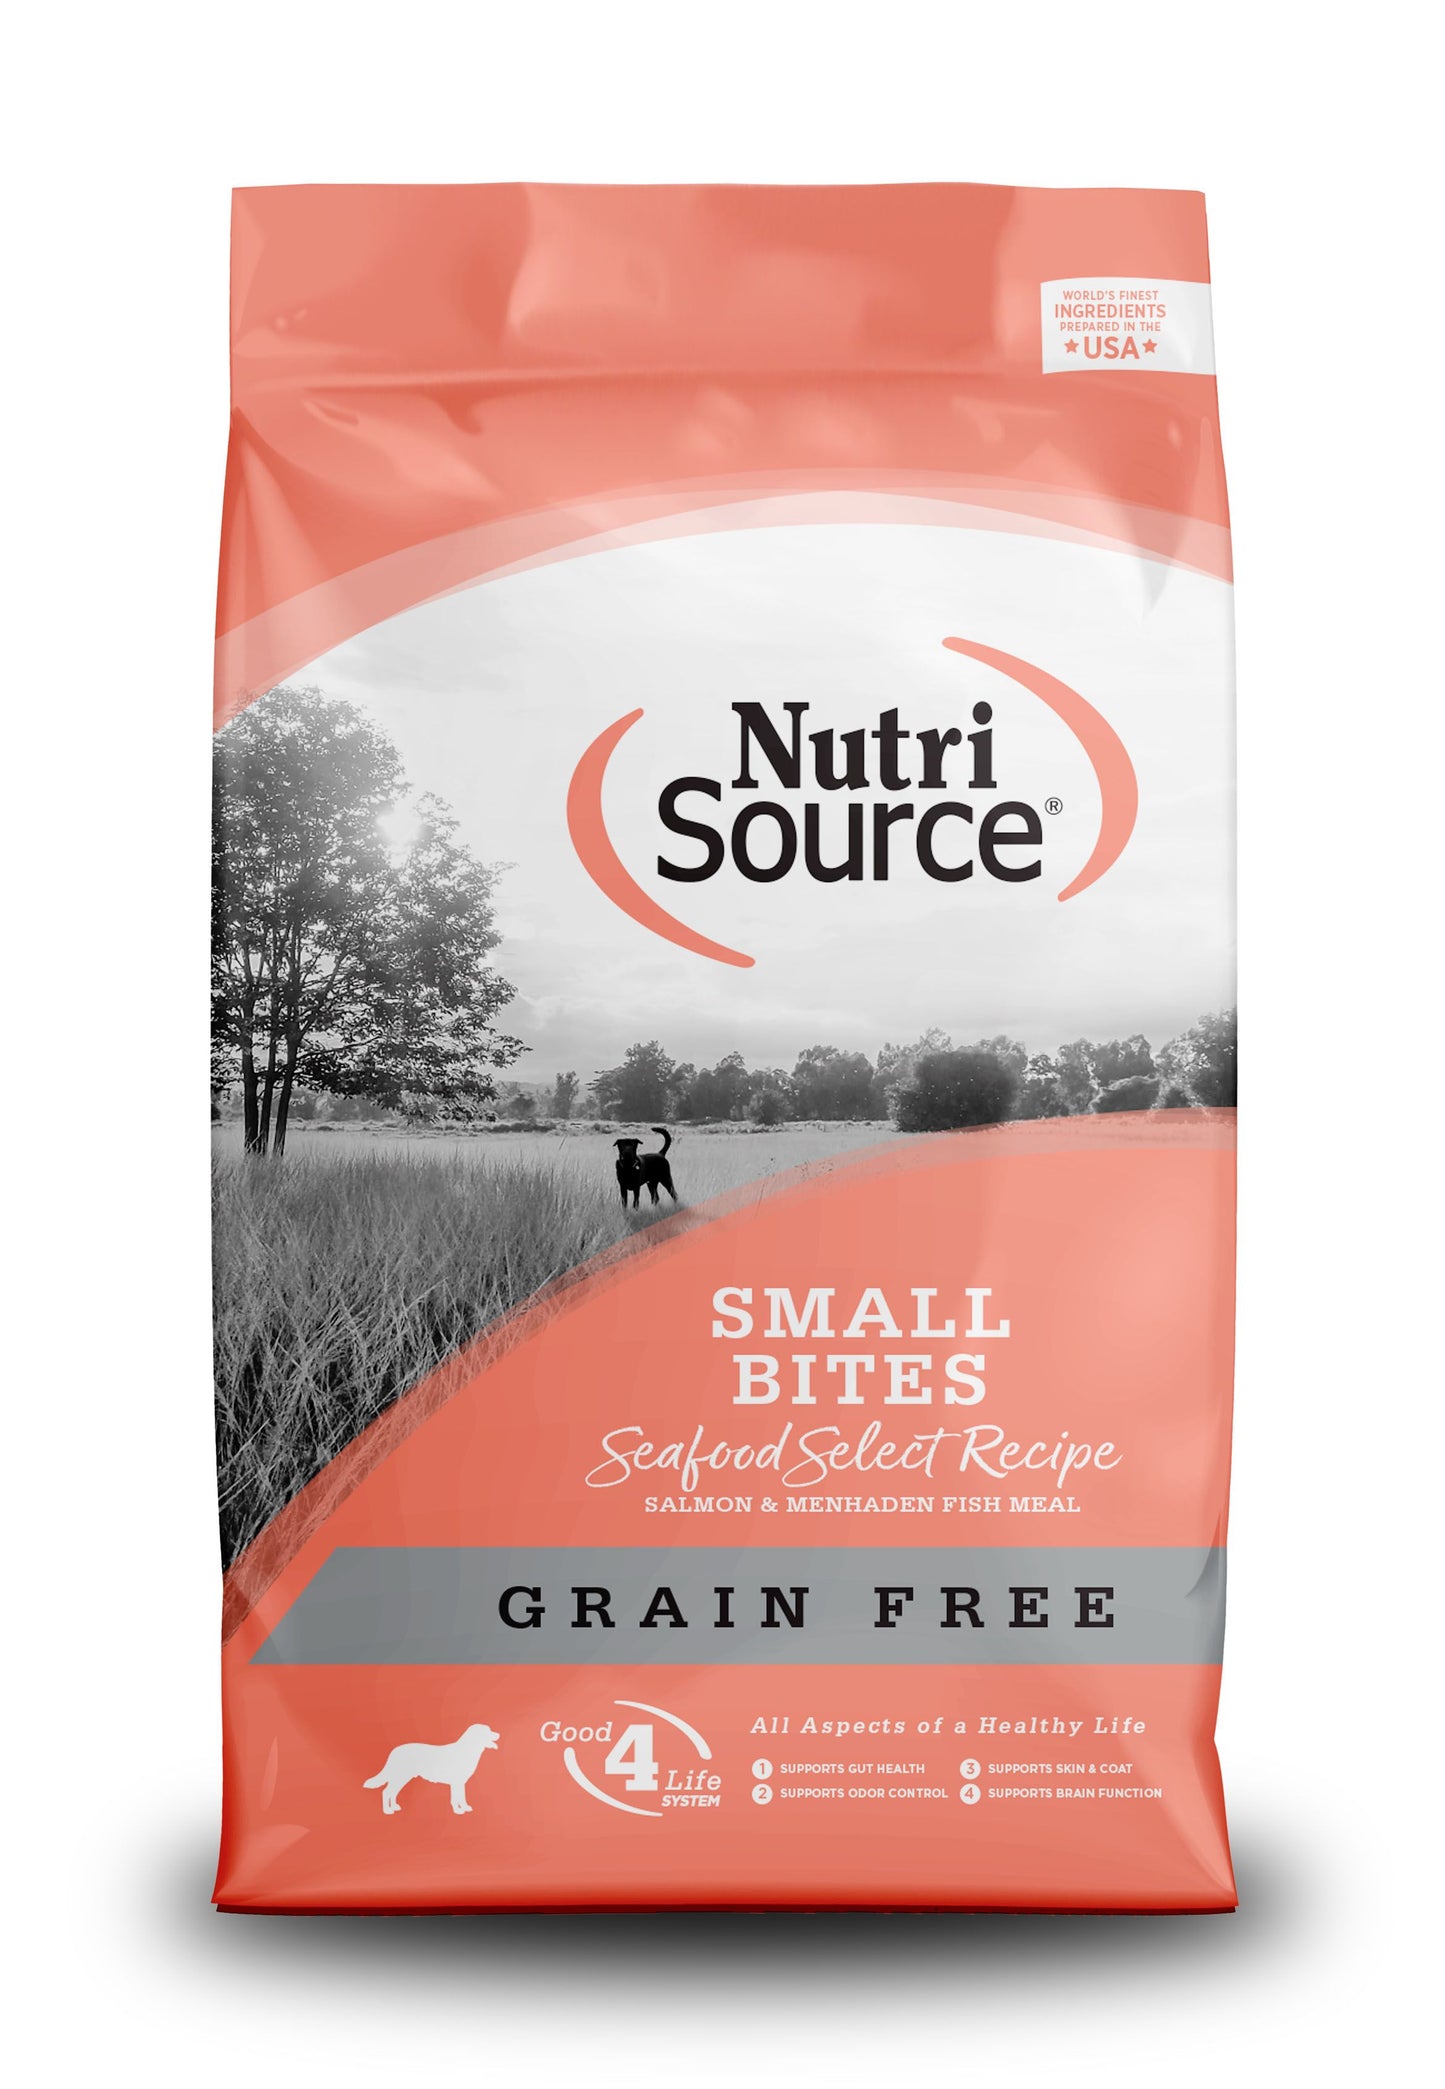 Nutri Source Grain-Free Small Bites Seafood Select